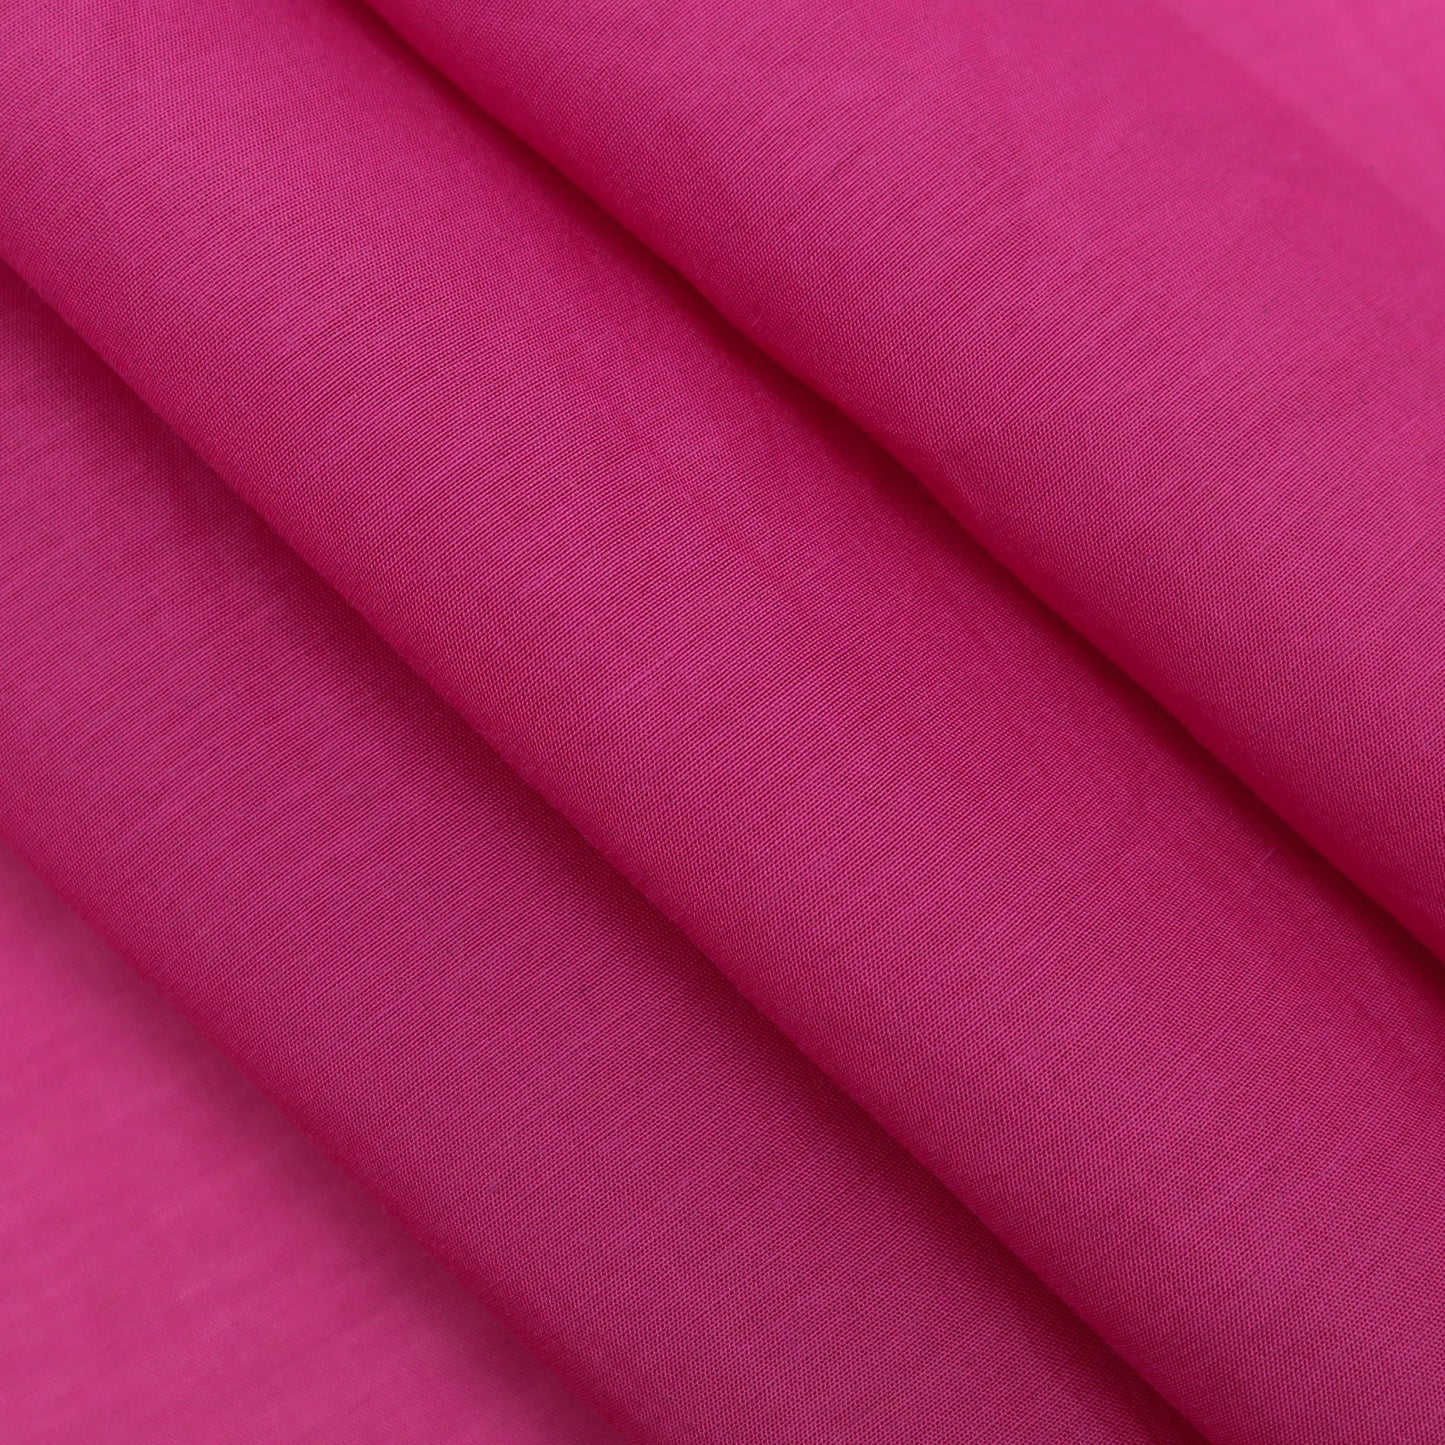 Lightweight Voile in Rosé (Pink)